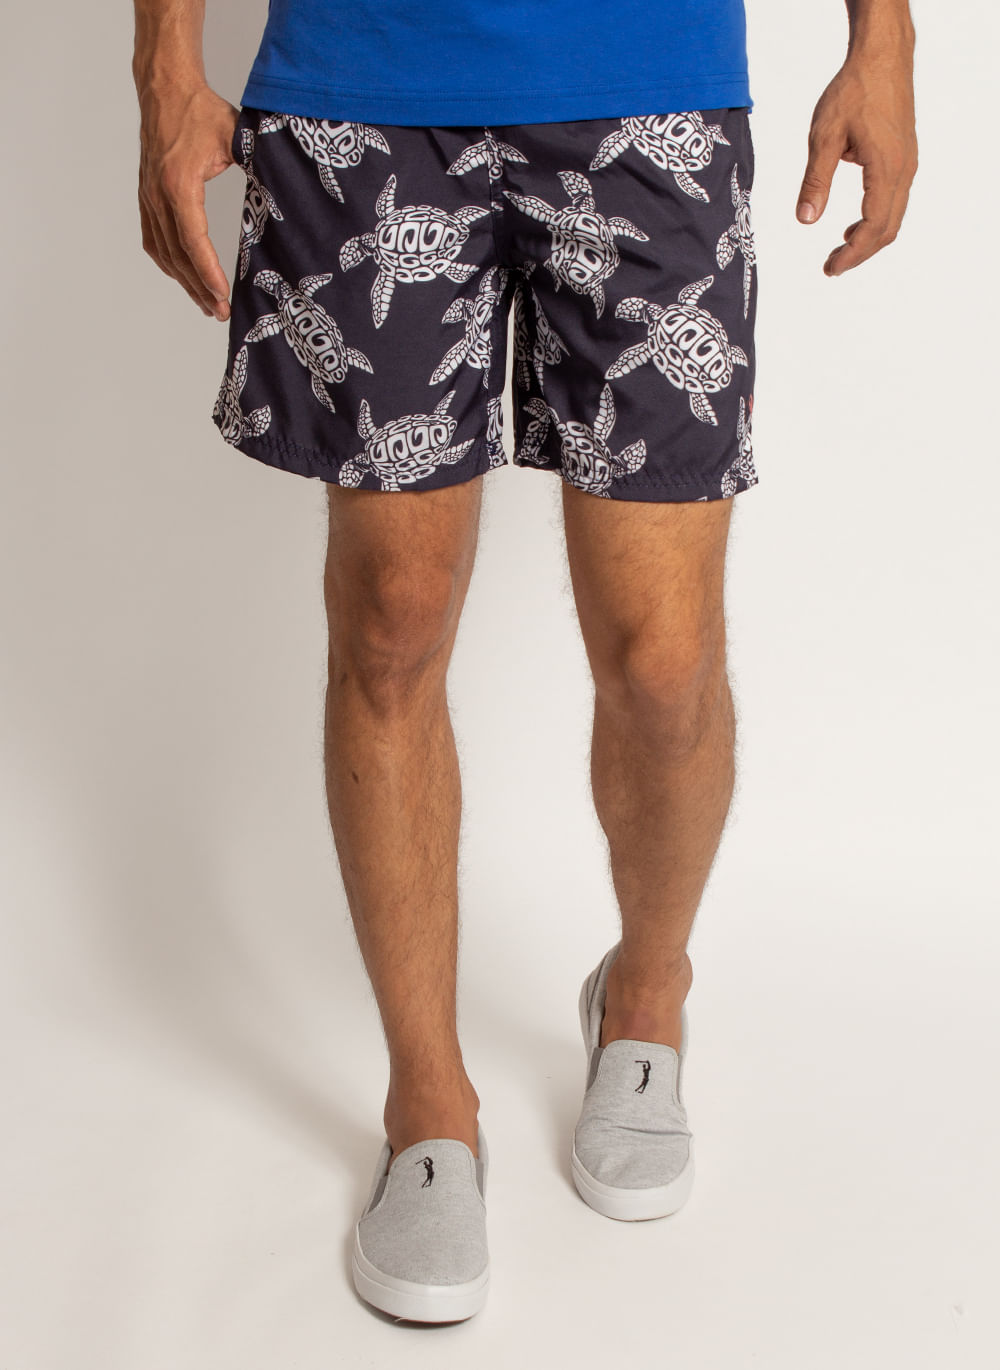 shorts-aleatory-masculino-estampada-turtle-modelo-2019-1-